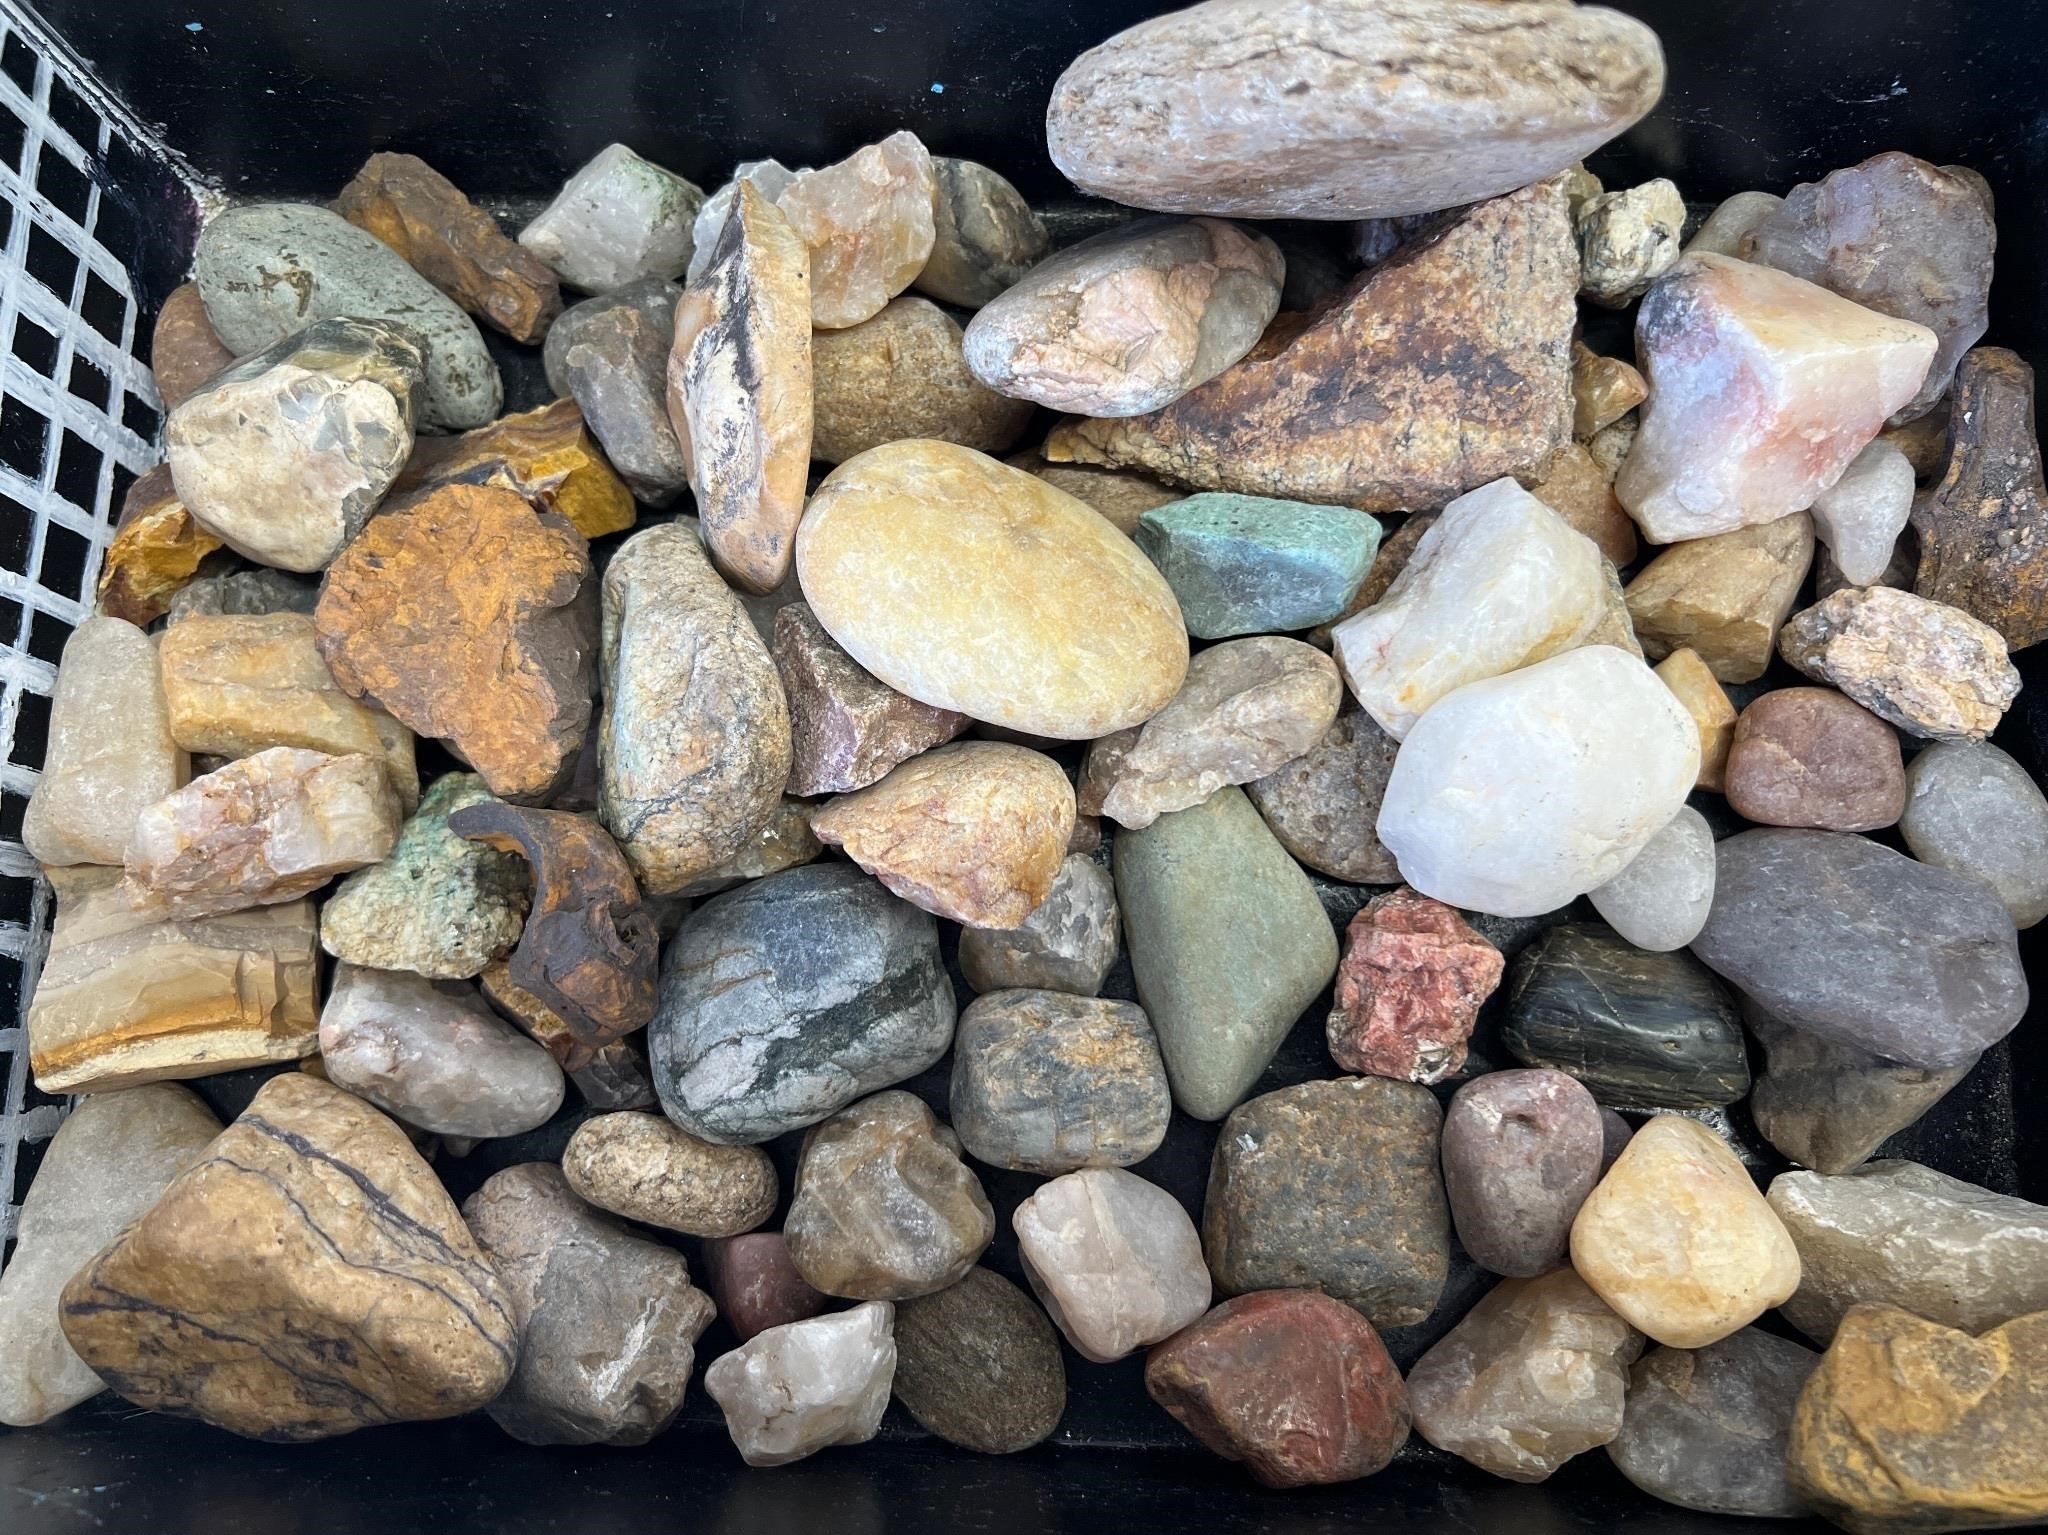 Metal Box of Unidentified Rocks